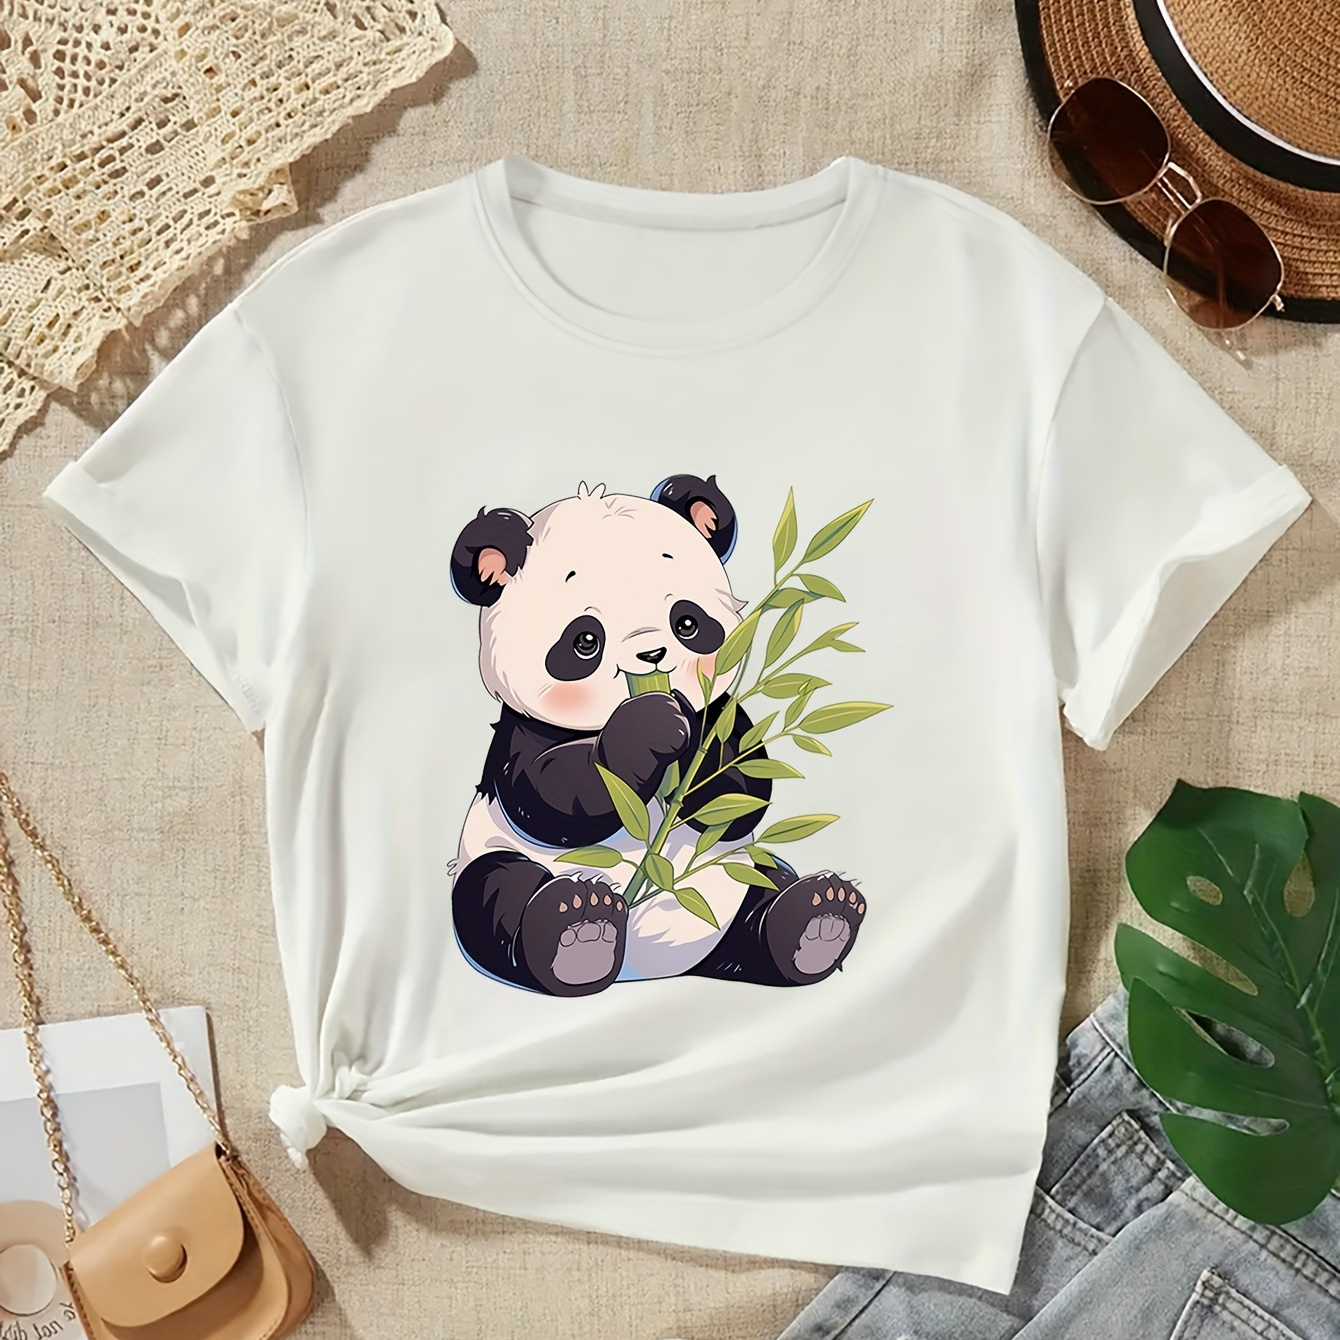 

Cartoon Panda Graphic Print, Girls' Casual & Comfy Crew Neck Short Sleeve T-shirt, Girls' Summer Daily Wear Clothes